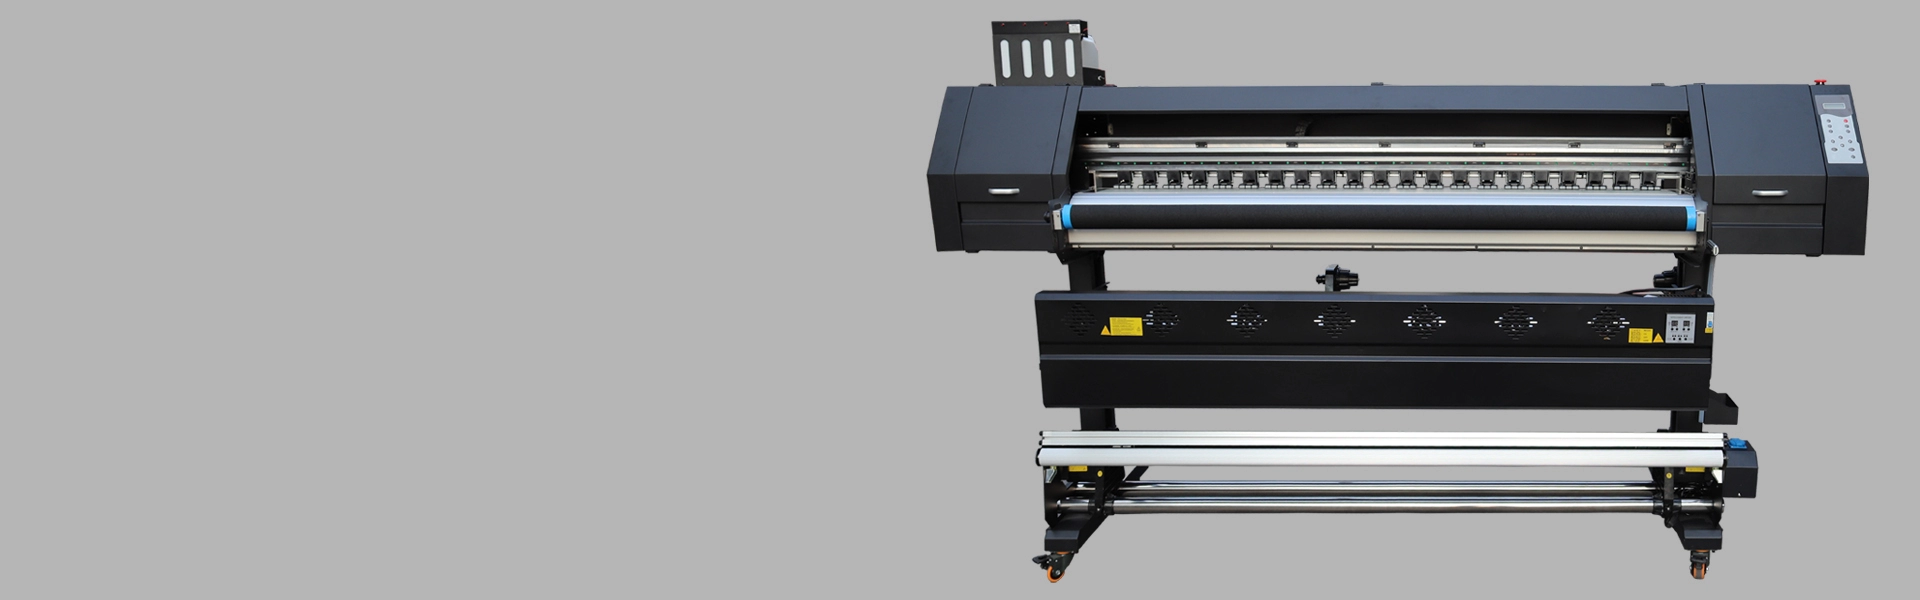 I3200 Sublimatie OLLIN-E1804 Printer